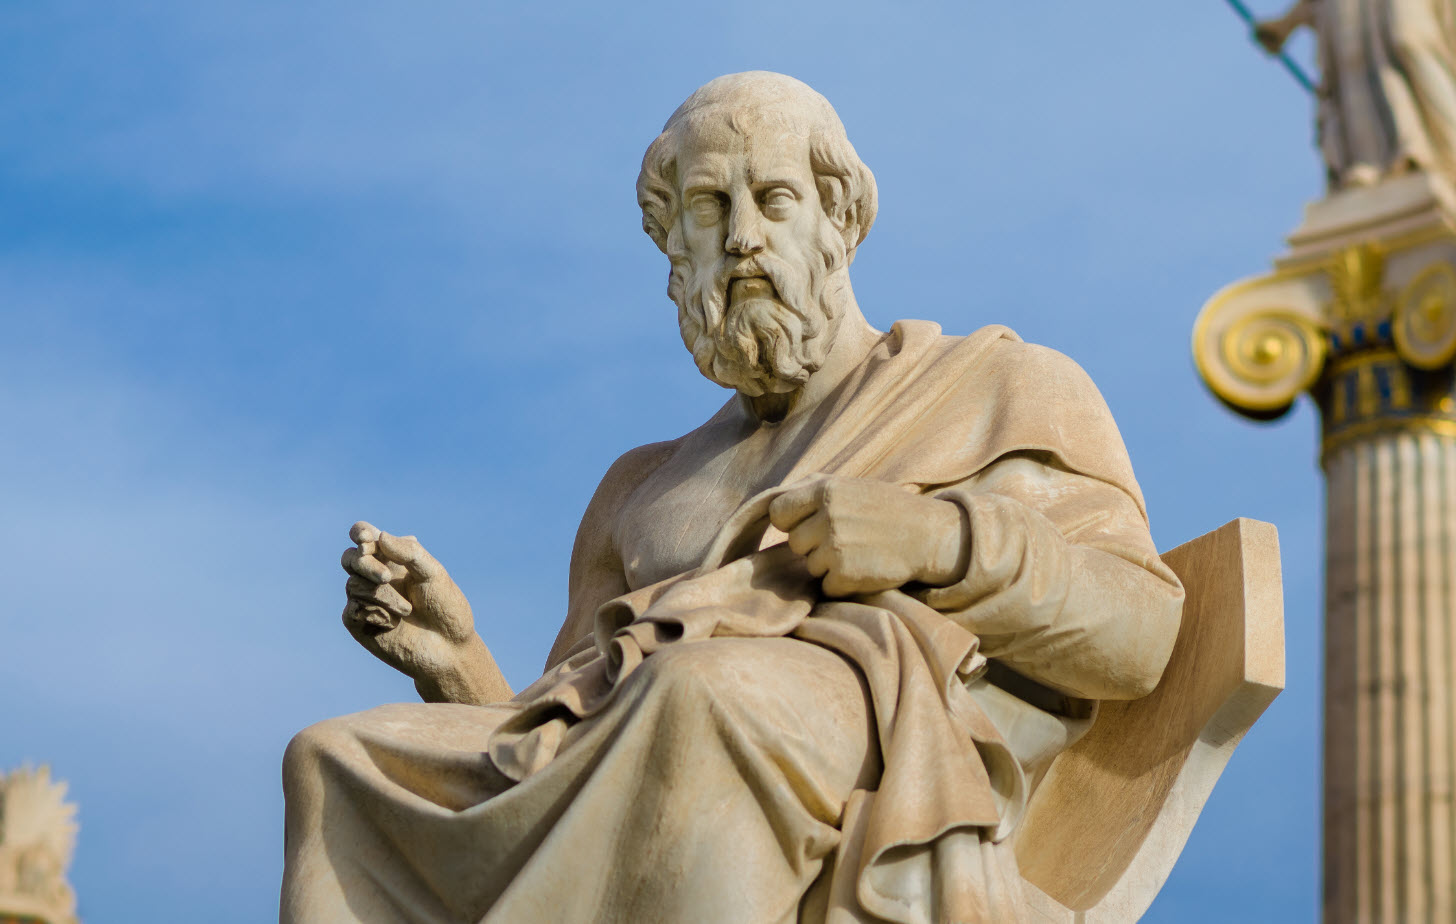 Mini Symposium on Plato